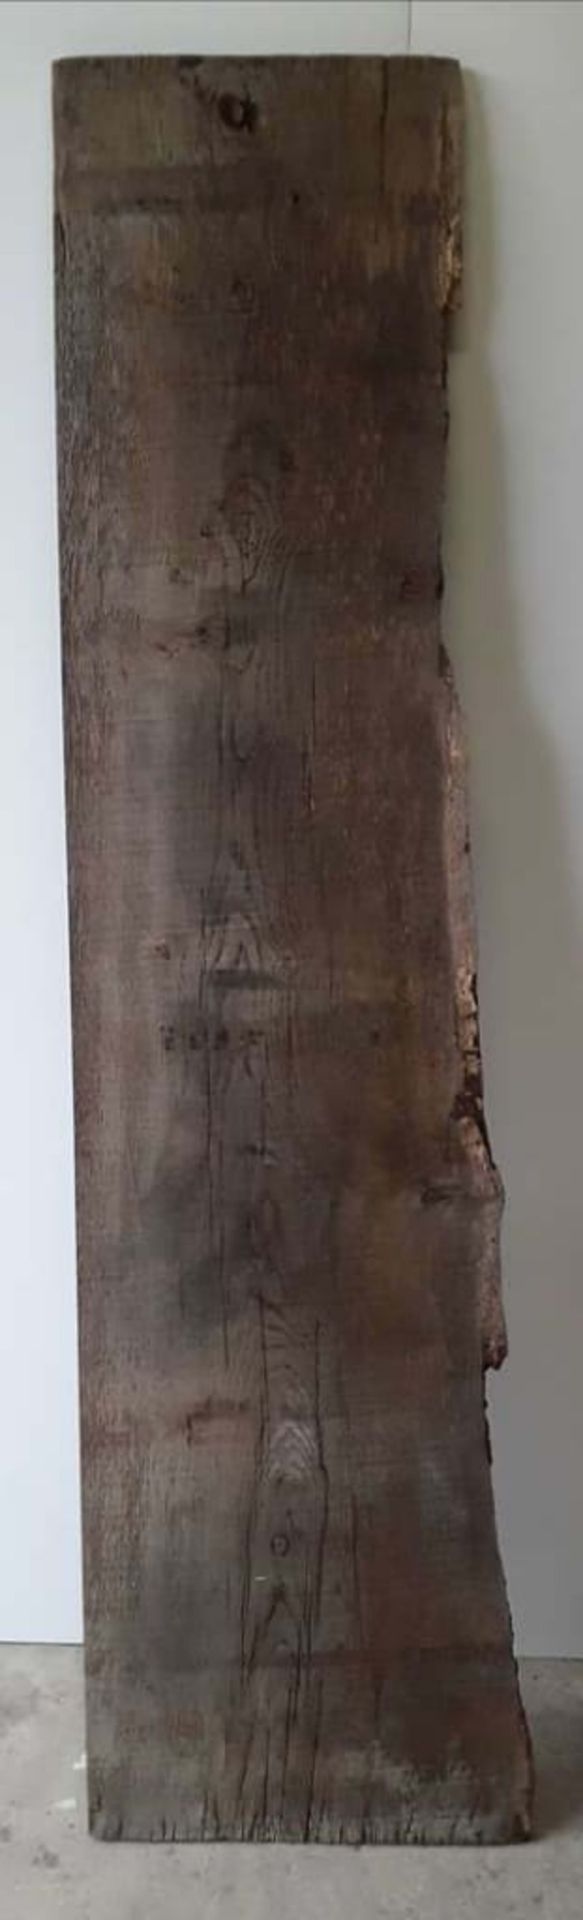 1 x Hardwood Air Dried Sawn Timber Waney Edge / Live Edge English Oak Board / Plank